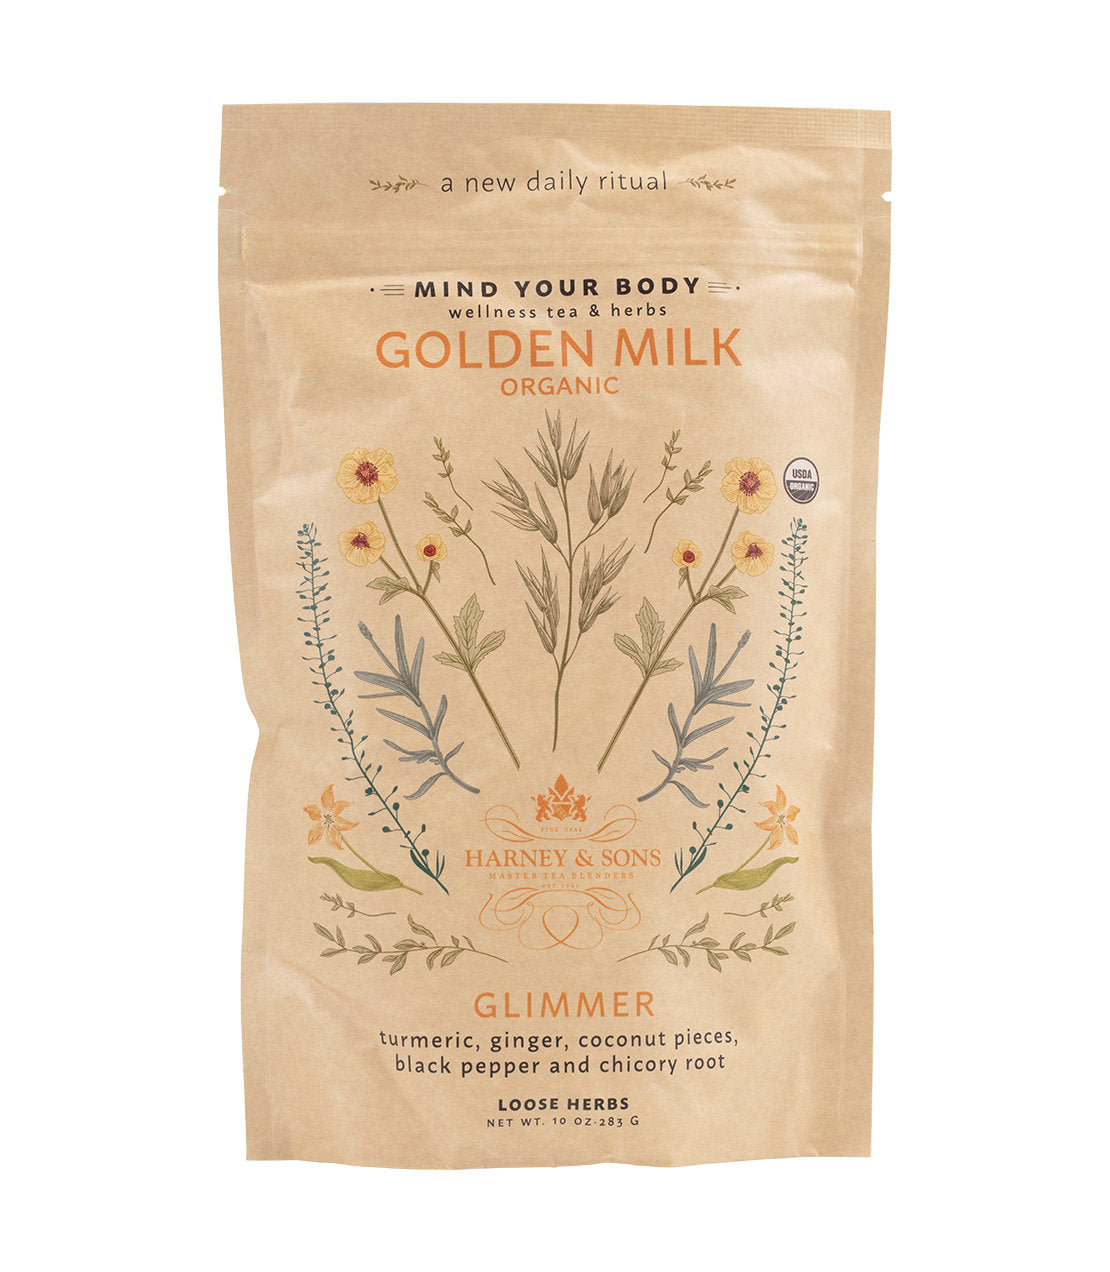 Golden Milk - Glimmer Wellness Blend - Loose 10 oz. Bag - Harney & Sons Fine Teas